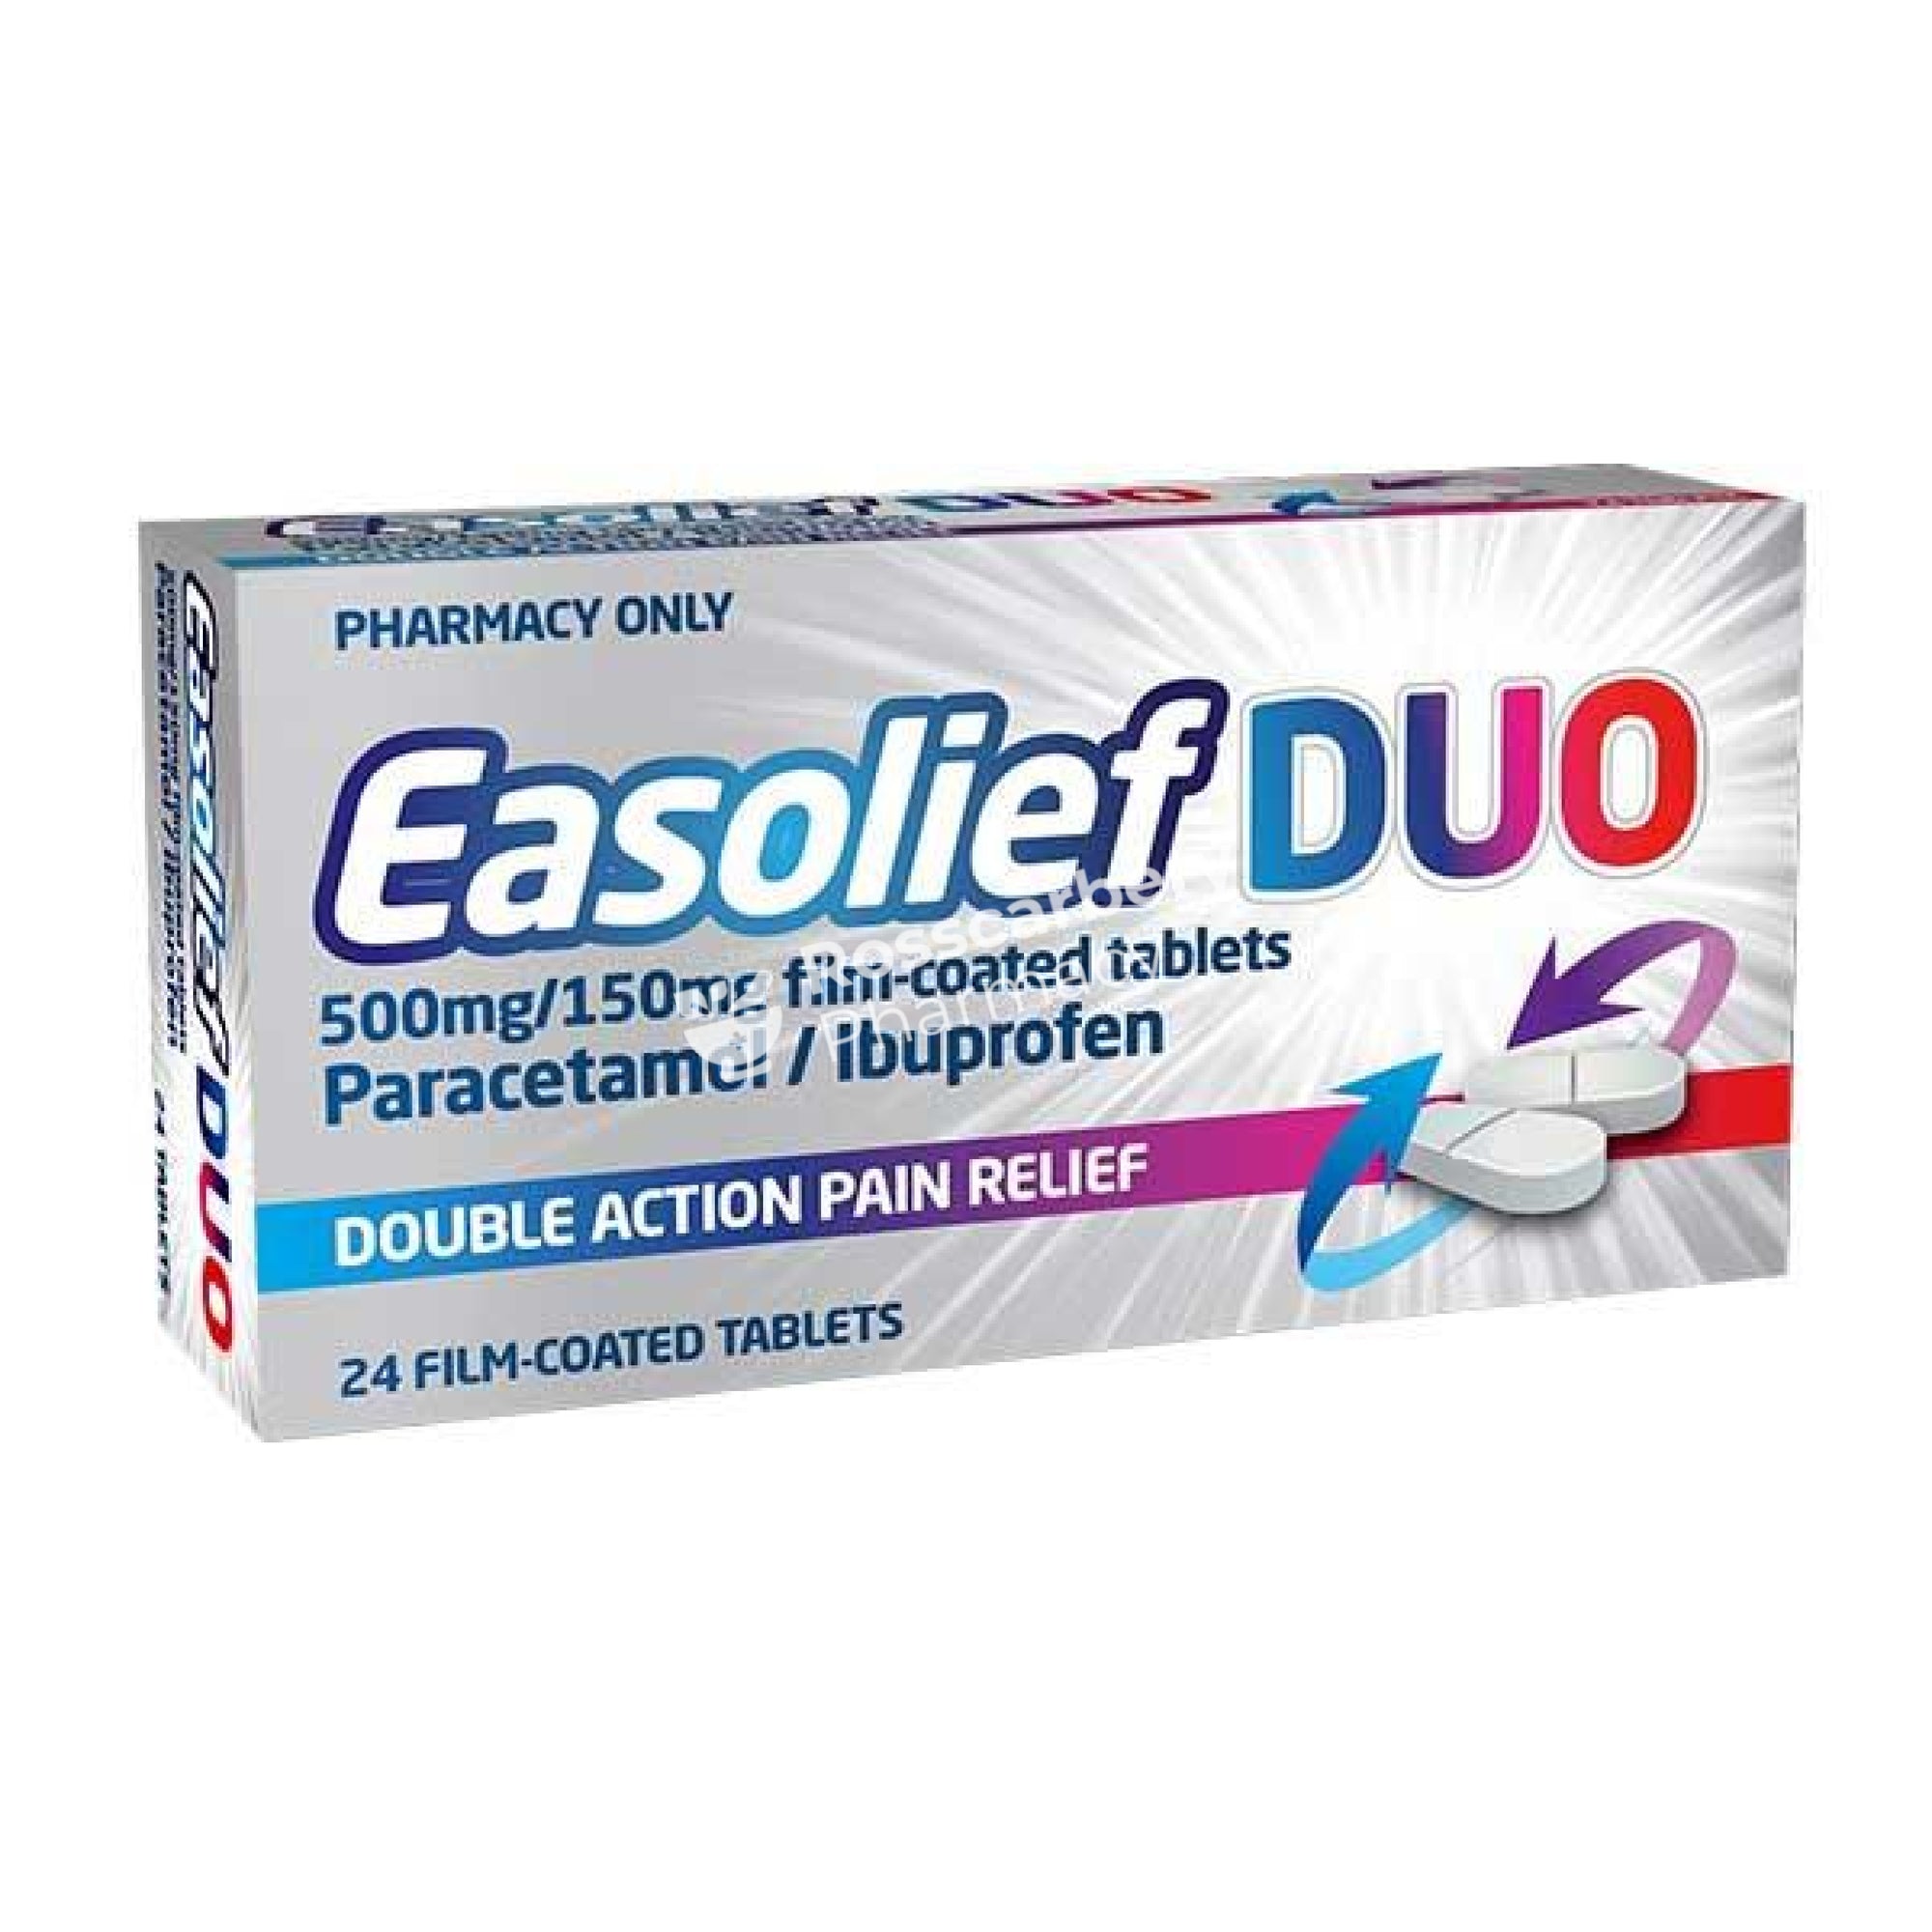 Easolief Duo 500Mg/150Mg Film-Coated Tablets Paracetamol/ibuprofen Pain Relief & Headache